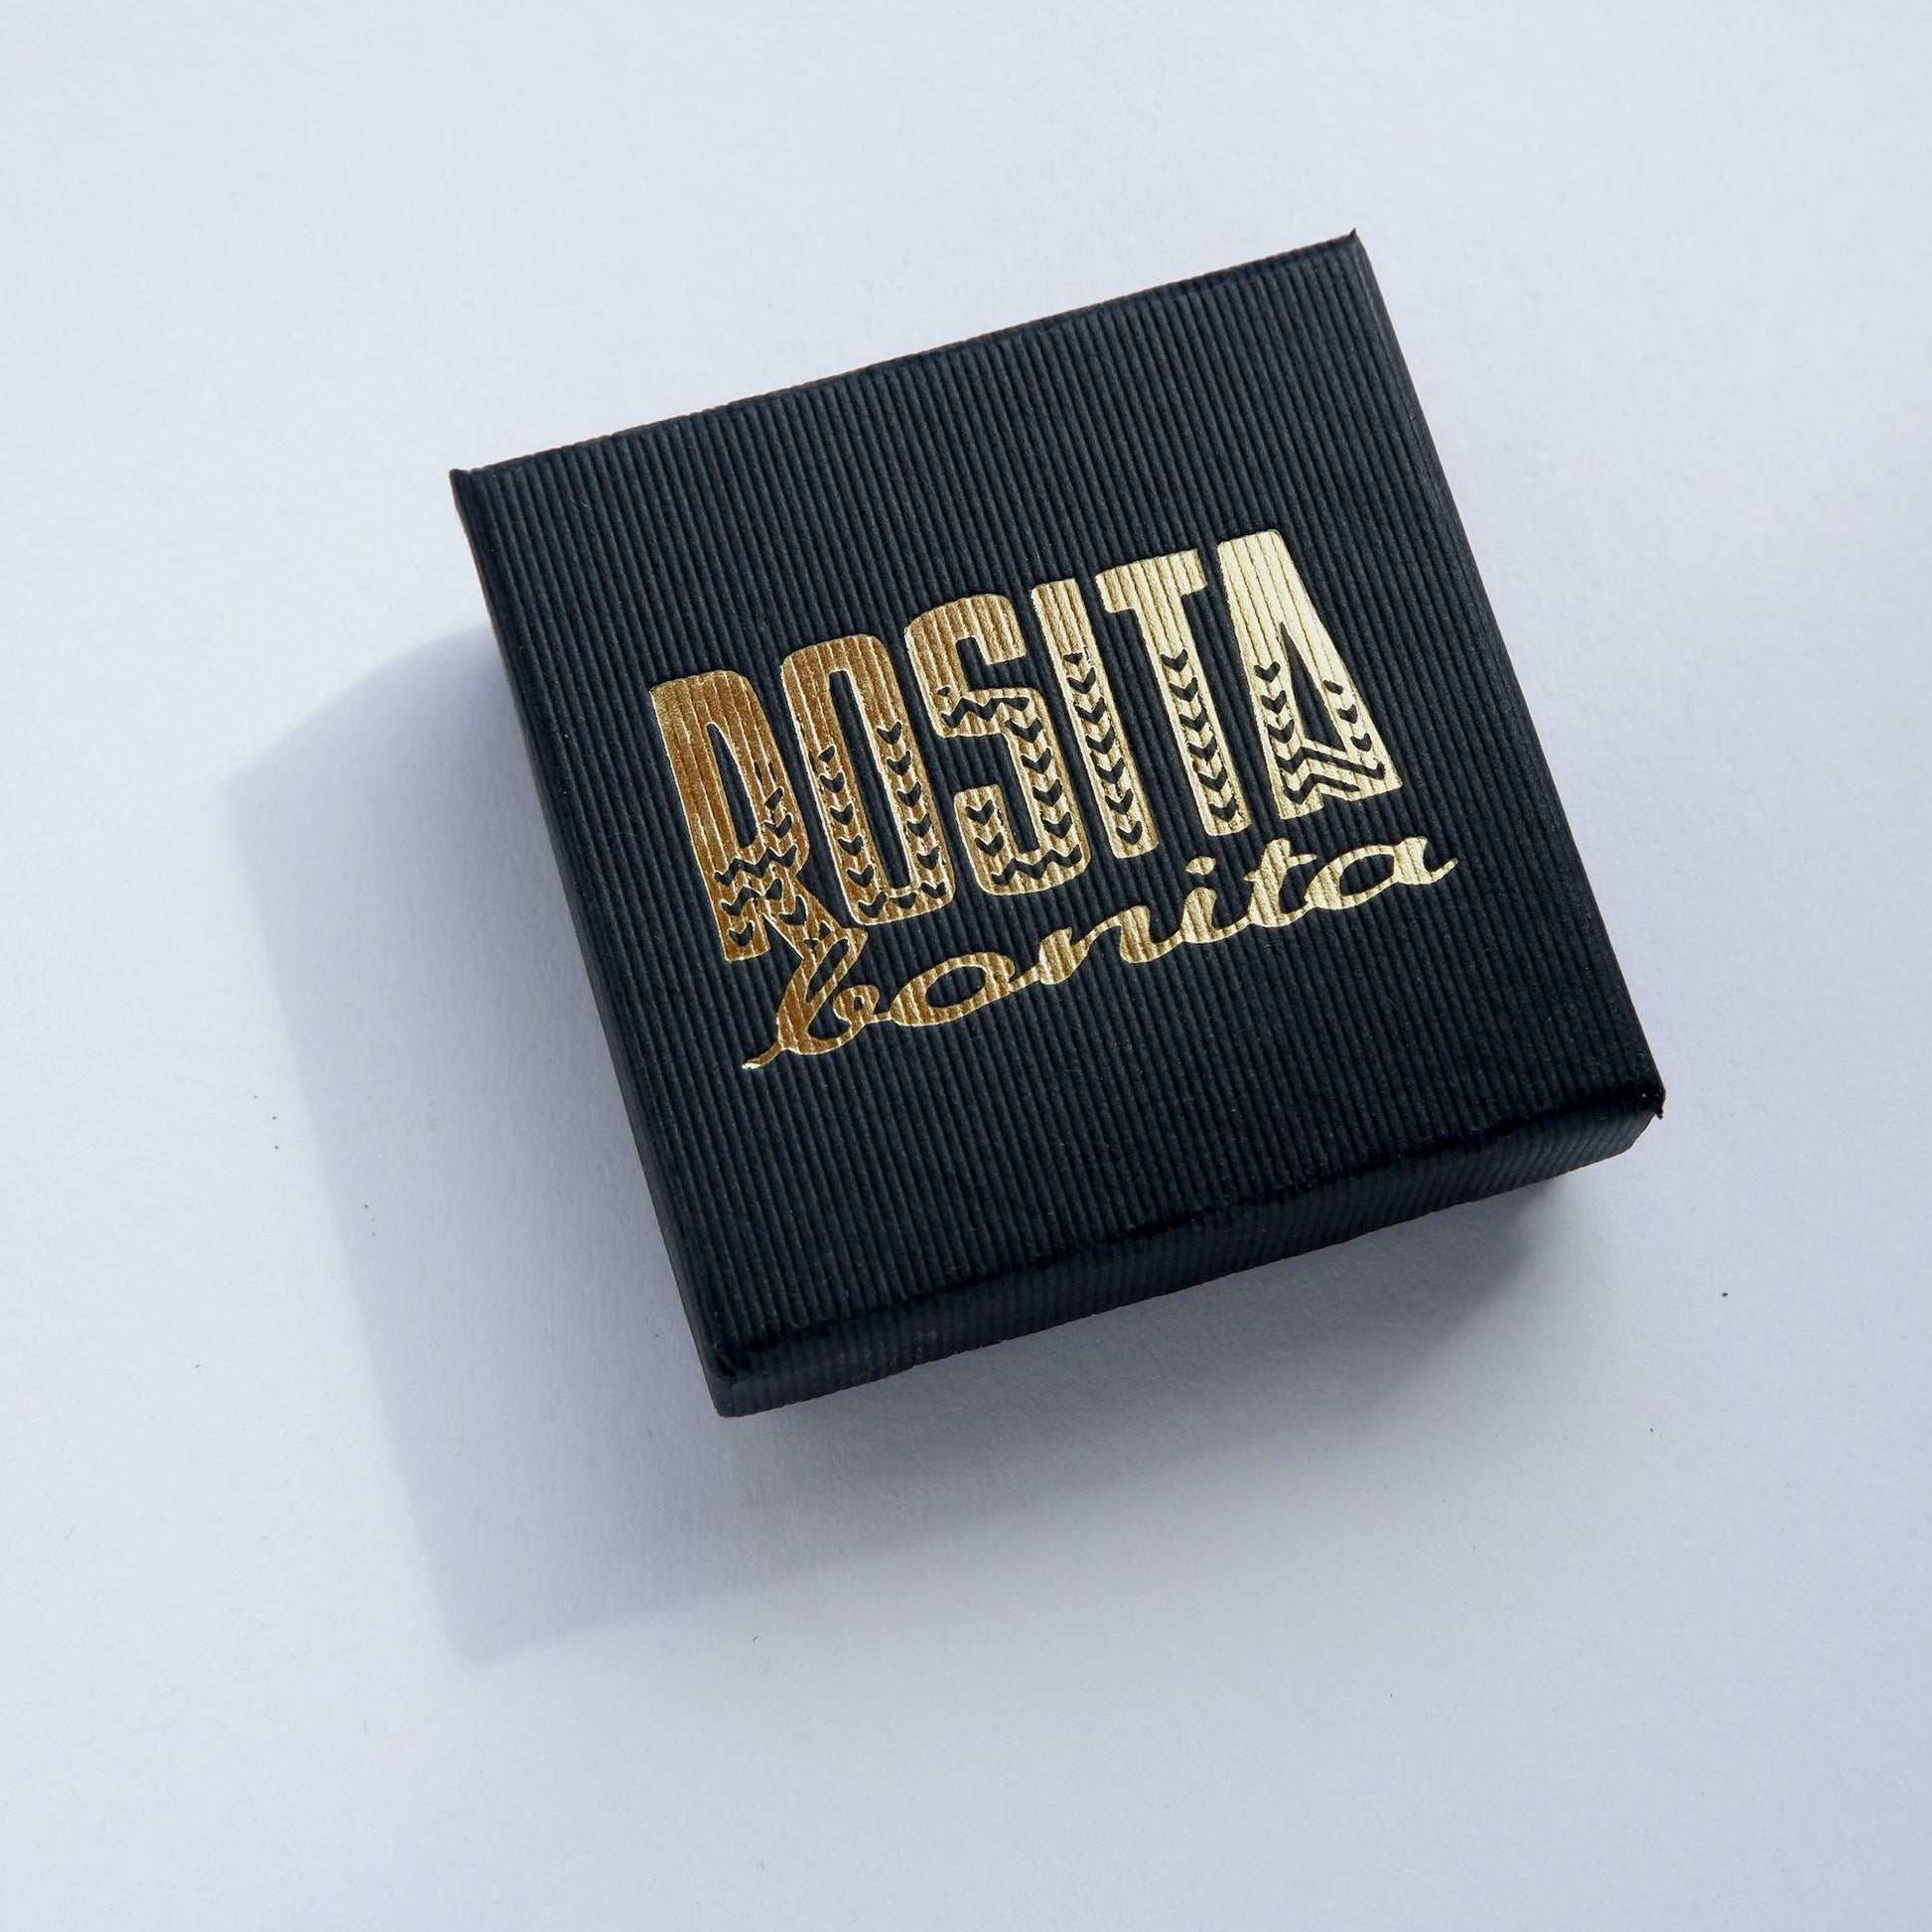 Black pinstripe cardboard box with Rosita Bonita logo in gold